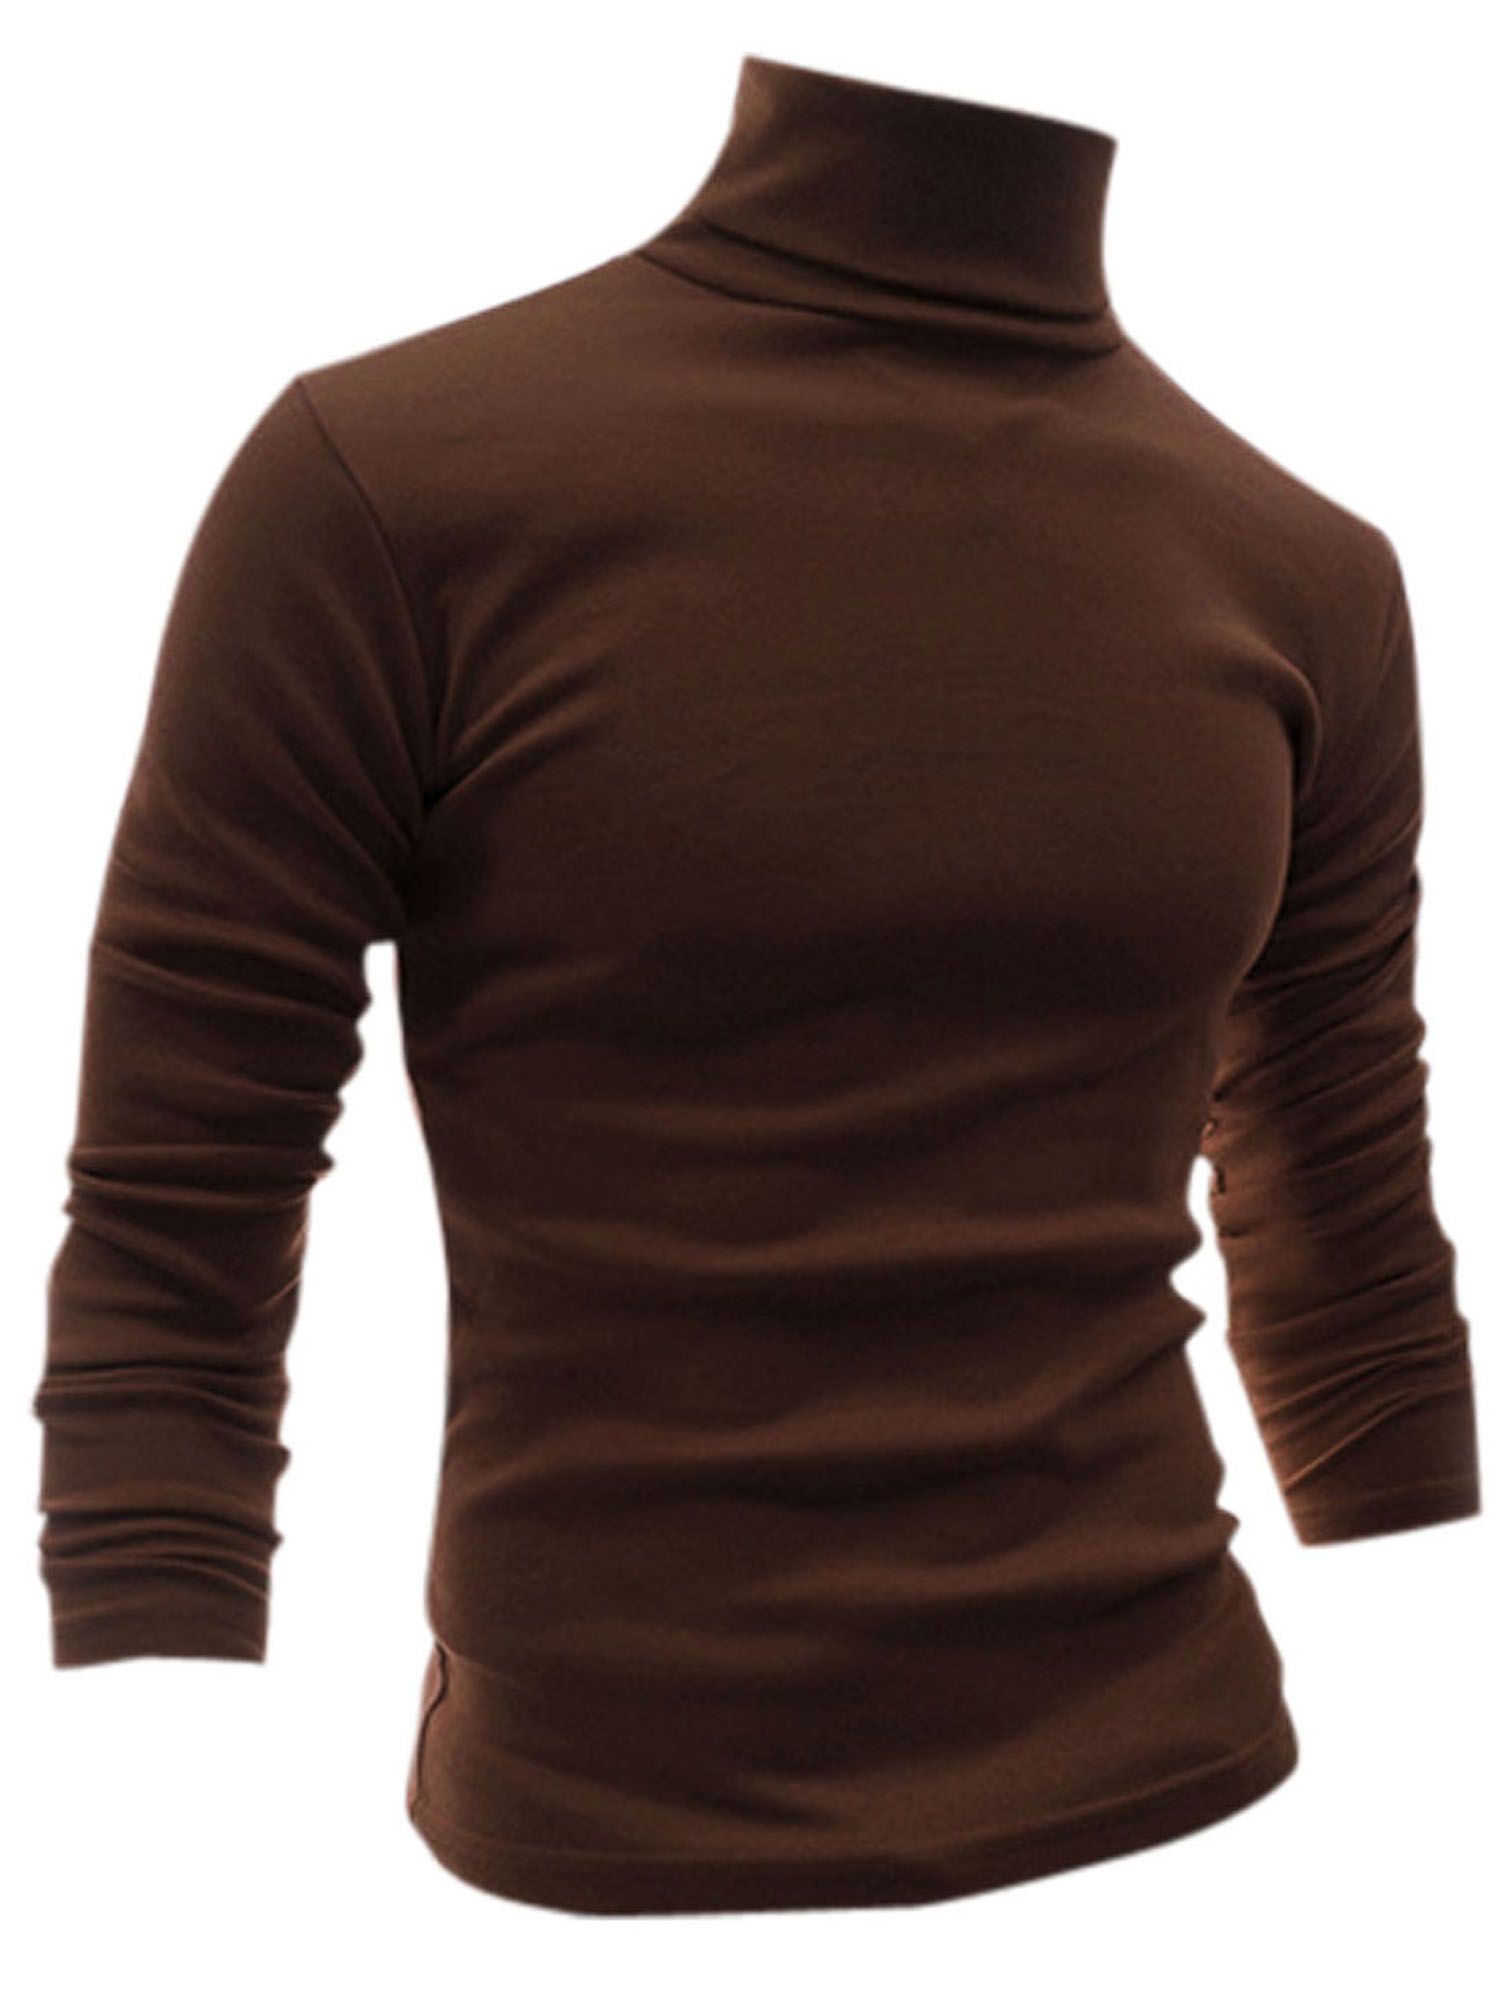 Unique Bargains Men's Turtle Neck Full Sleeves Stretchy Slim Fit Shirt S (US 34) Brown | Walmart (US)